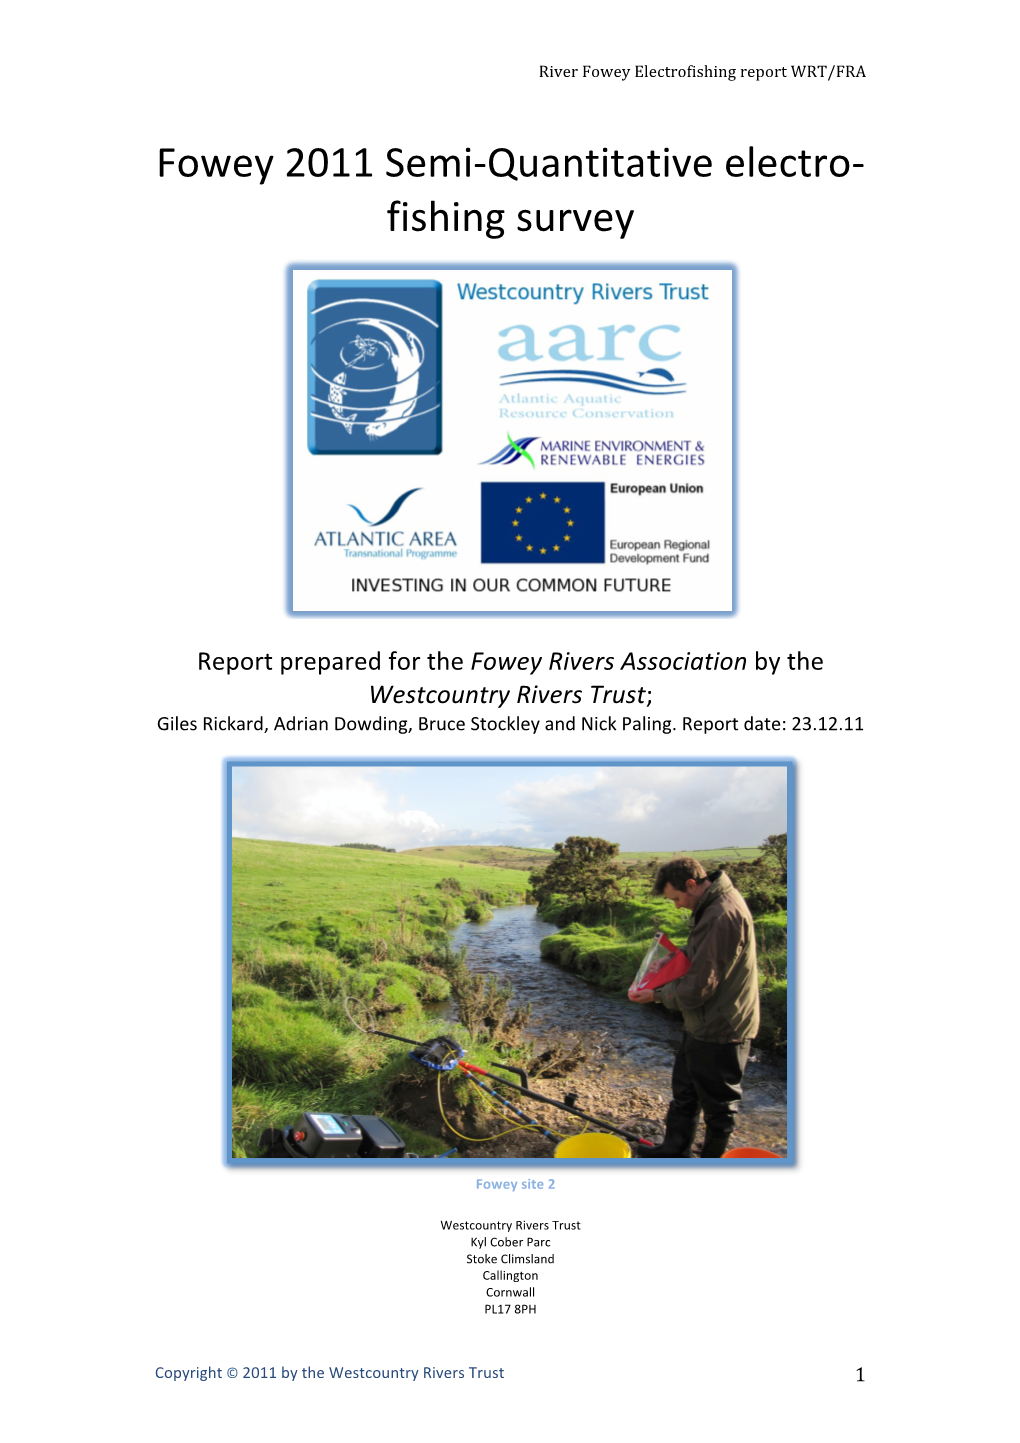 Fowey 2011 Semi-‐Quantitative Electro-‐ Fishing Survey